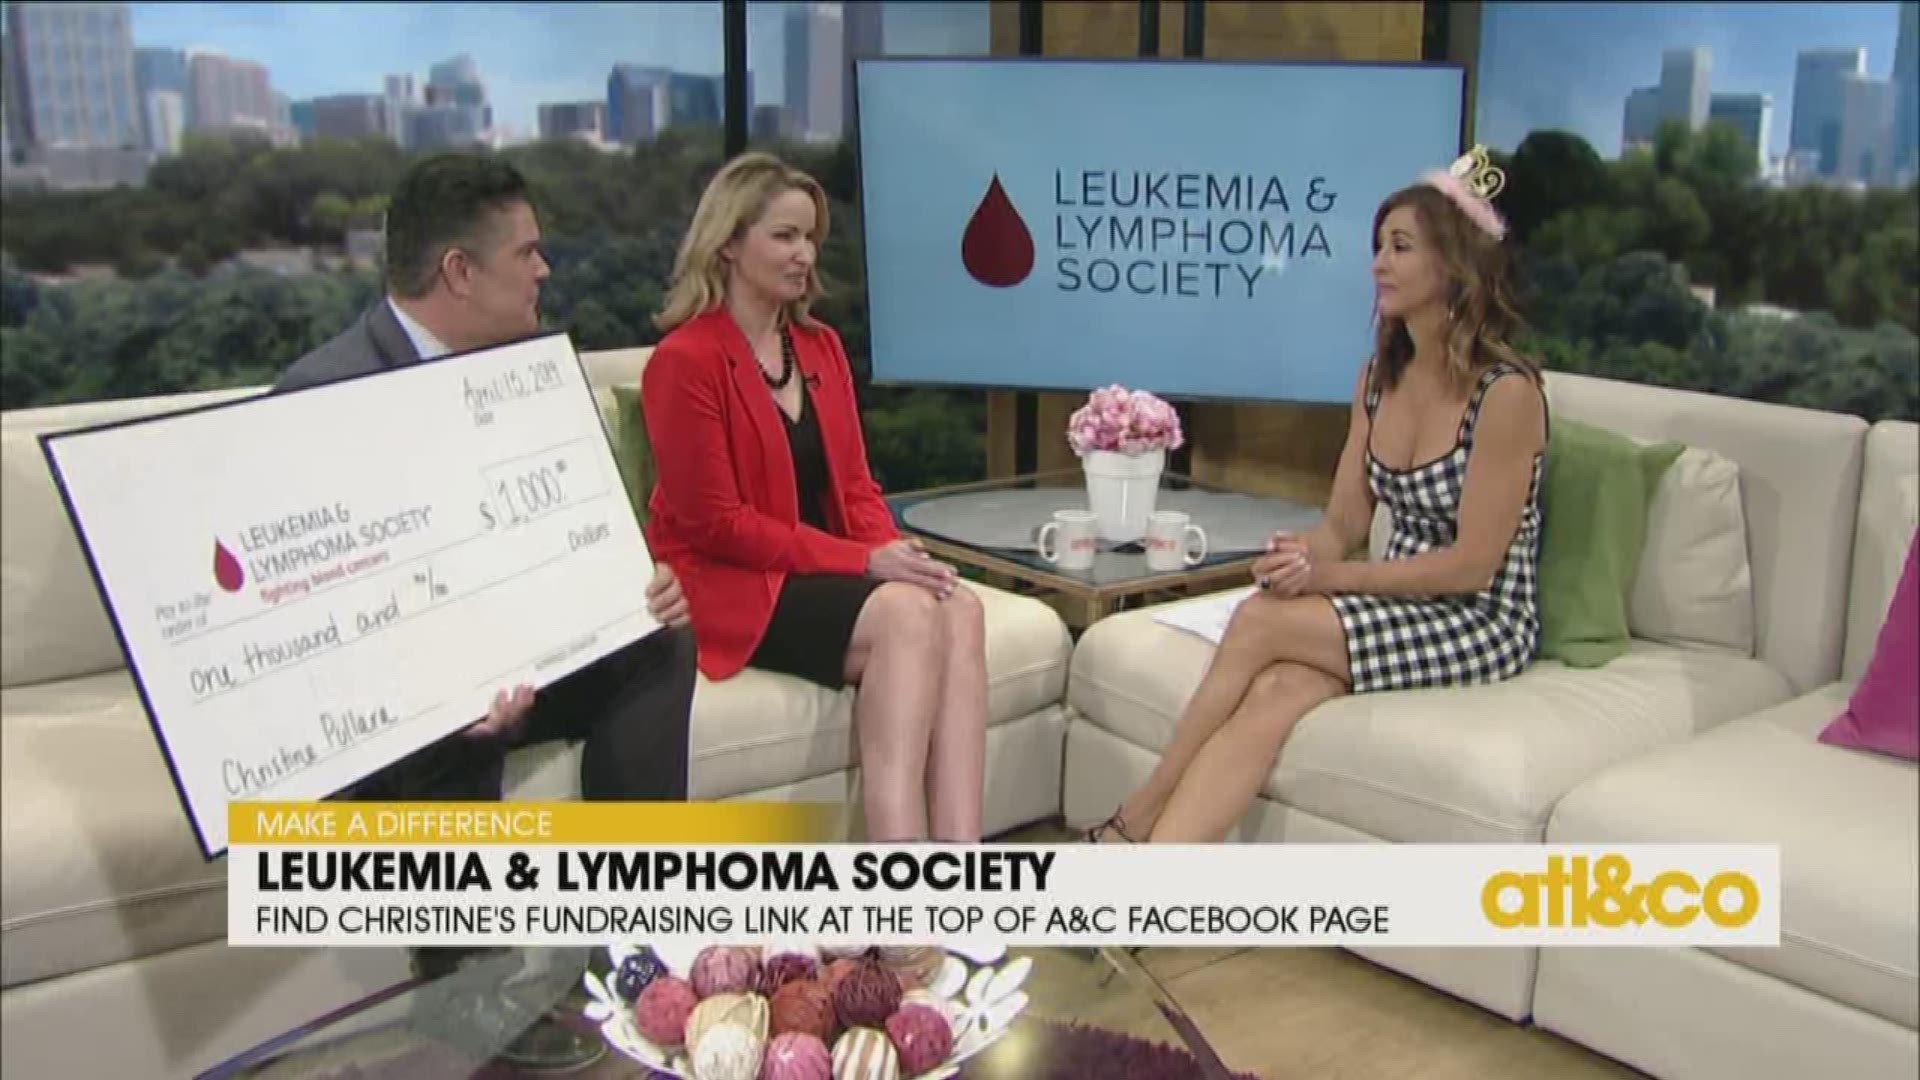 Please donate to the Leukemia & Lymphoma Society at the top of the 'Atlanta & Company' Facebook page.